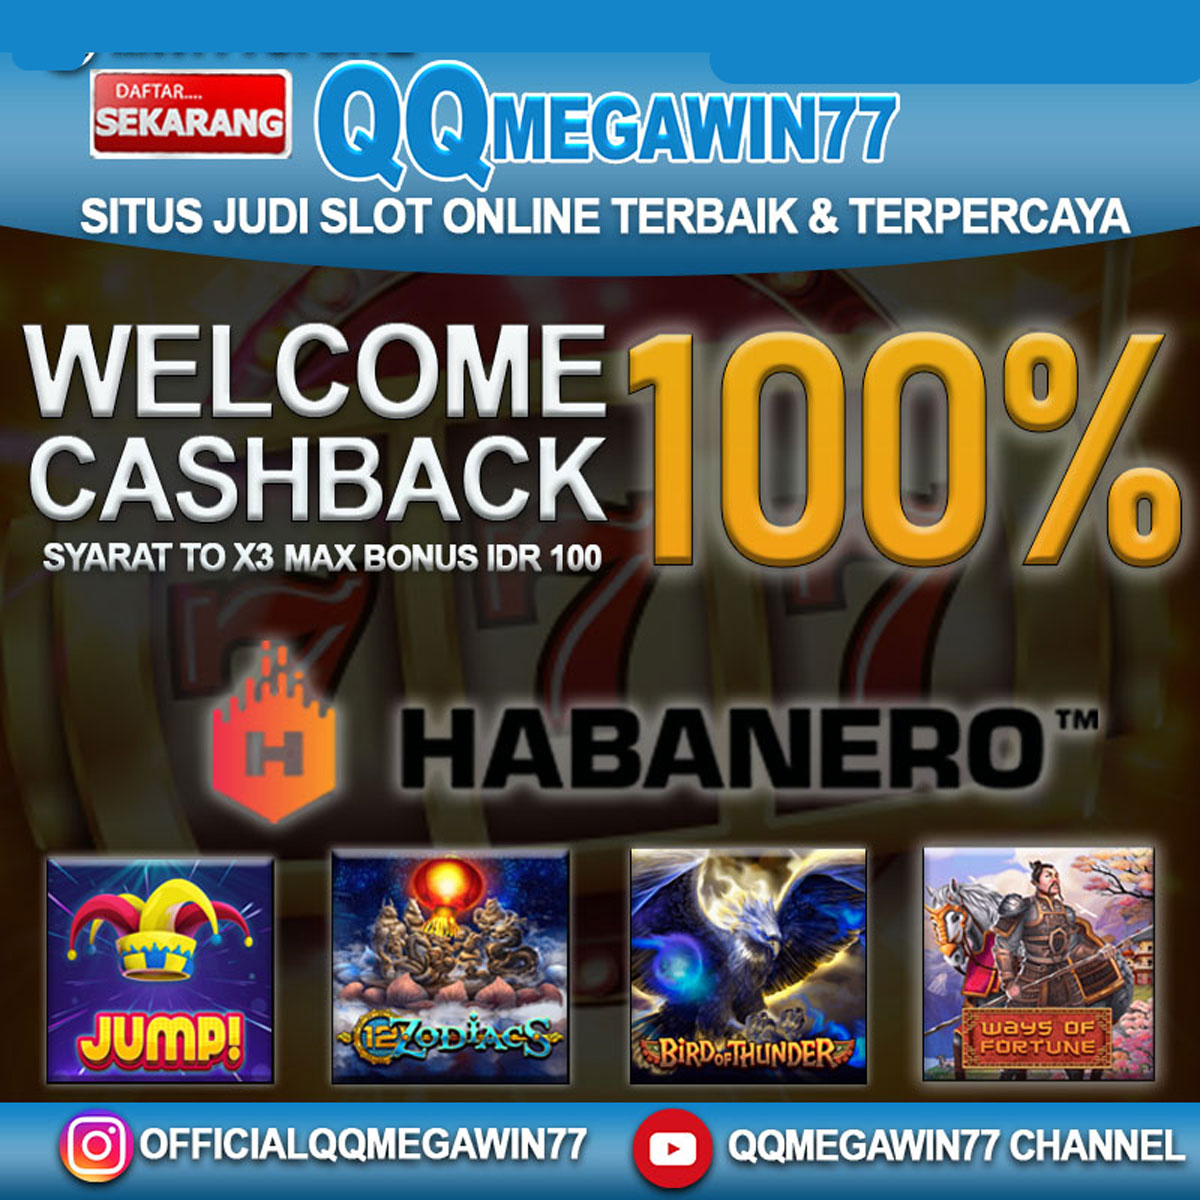 QQMEGAWIN77 bonus cashback 100% to 3x